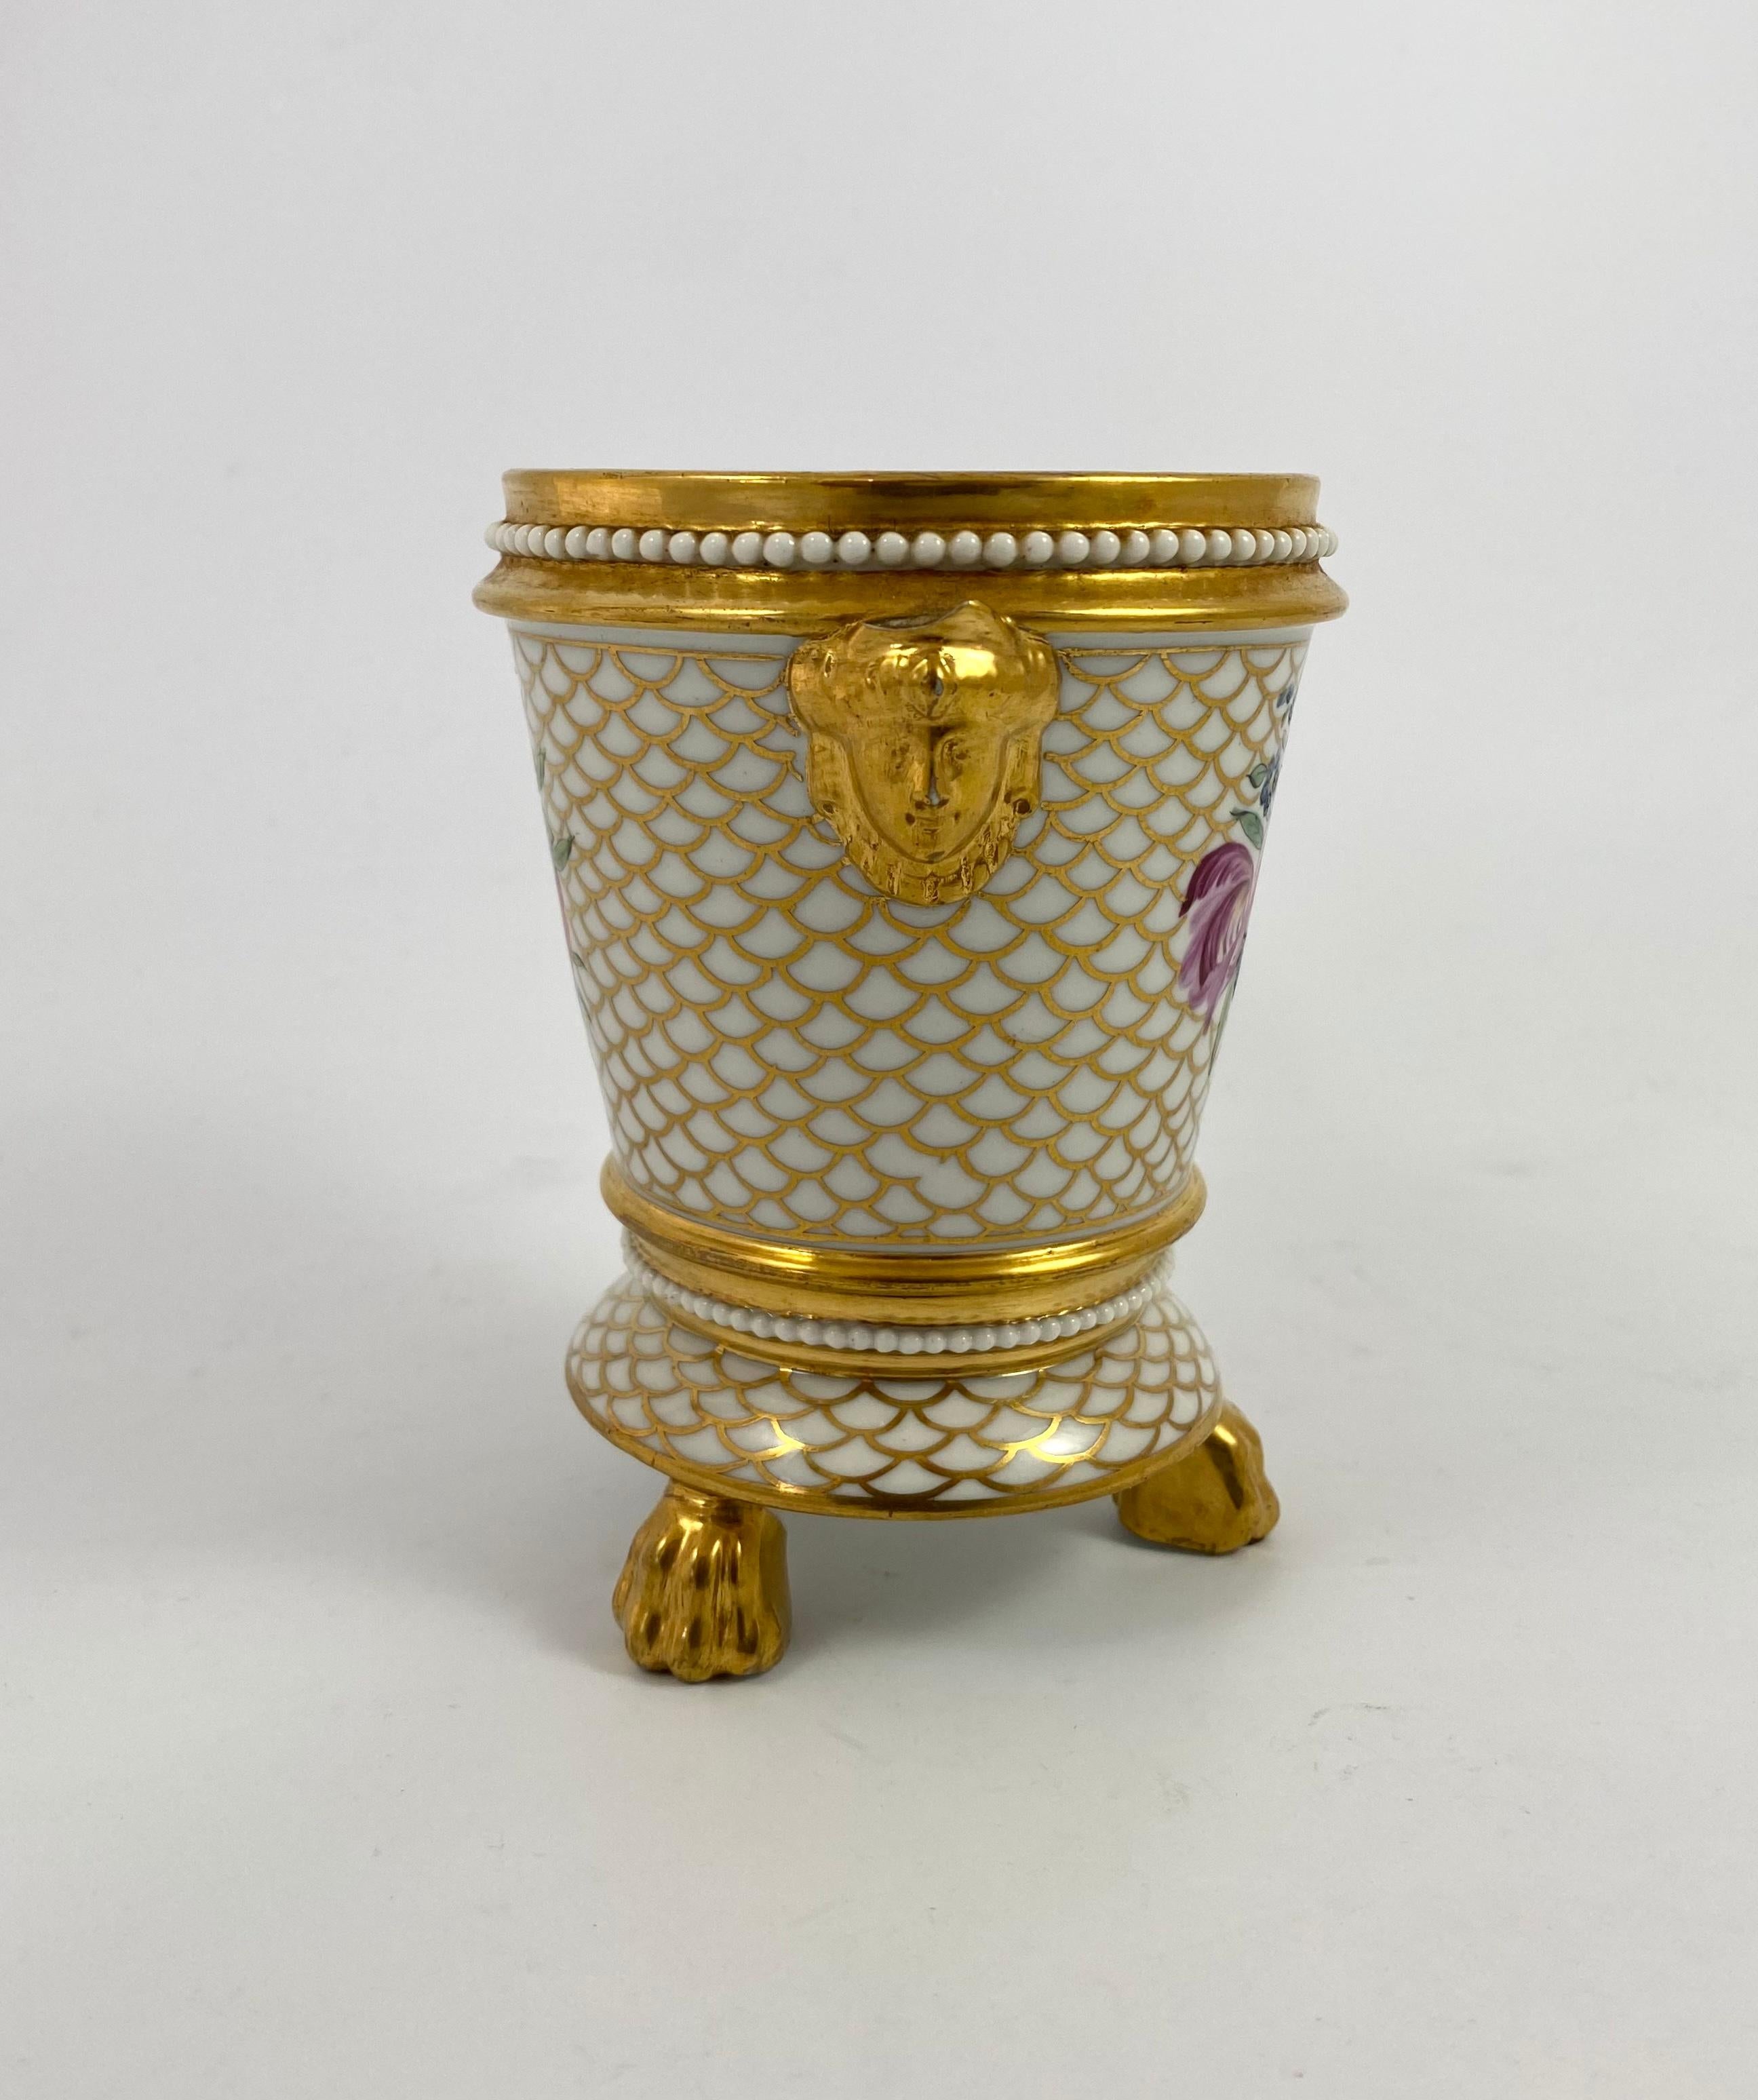 Regency English Porcelain Cache Pot and Cover, c. 1820